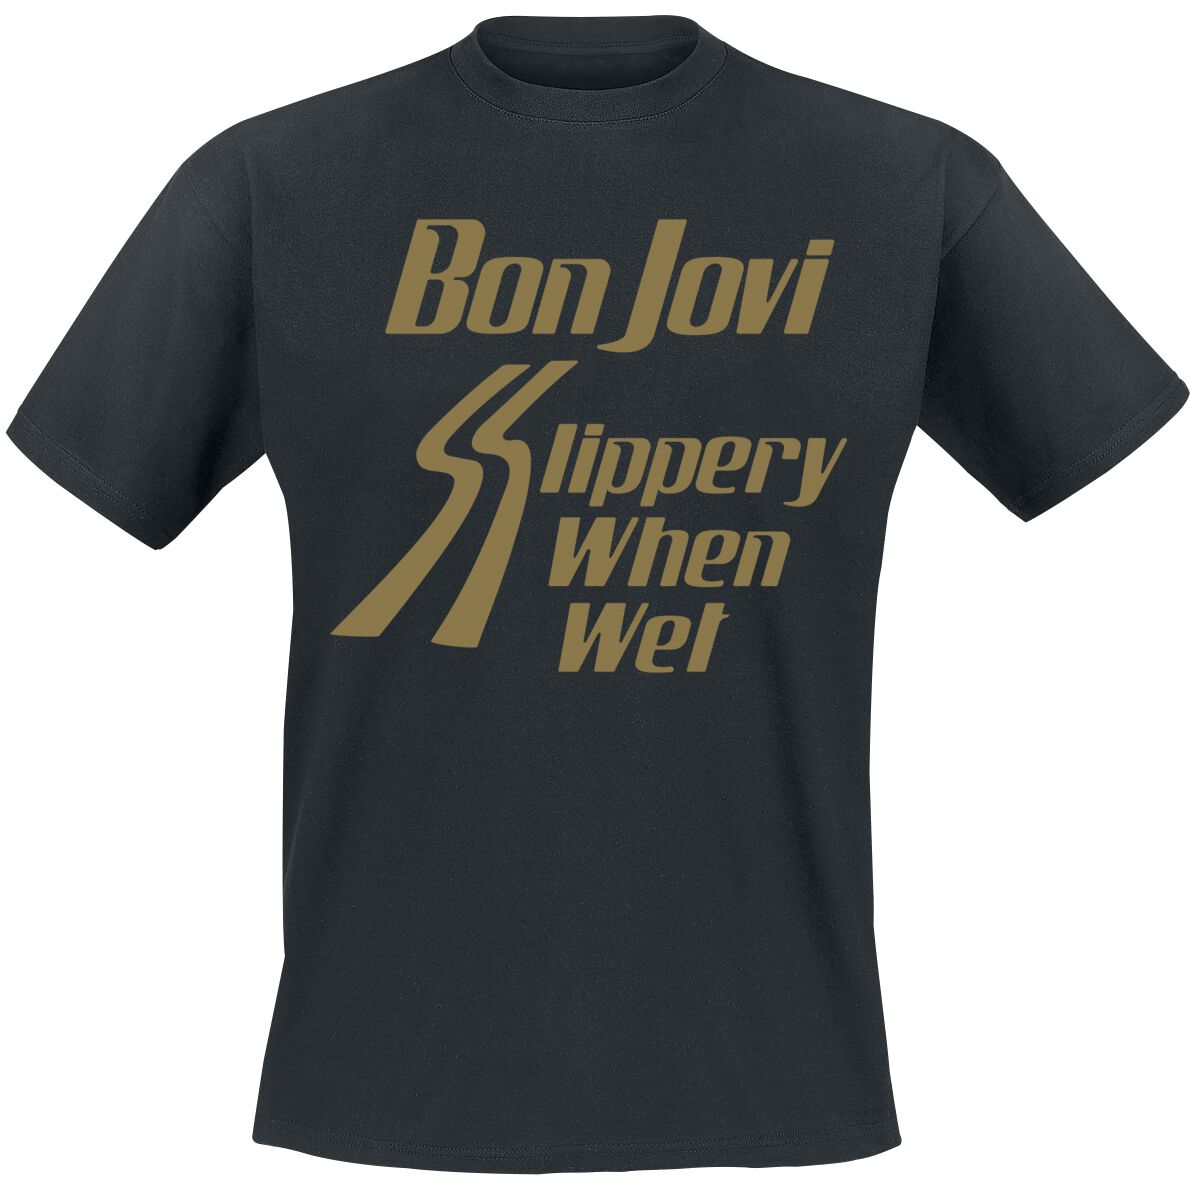 bon jovi t-shirt - slippery when wet - s bis 3xl - fÃ¼r mÃ¤nner - grÃ¶ÃŸe 3xl - - lizenziertes merchandise! schwarz